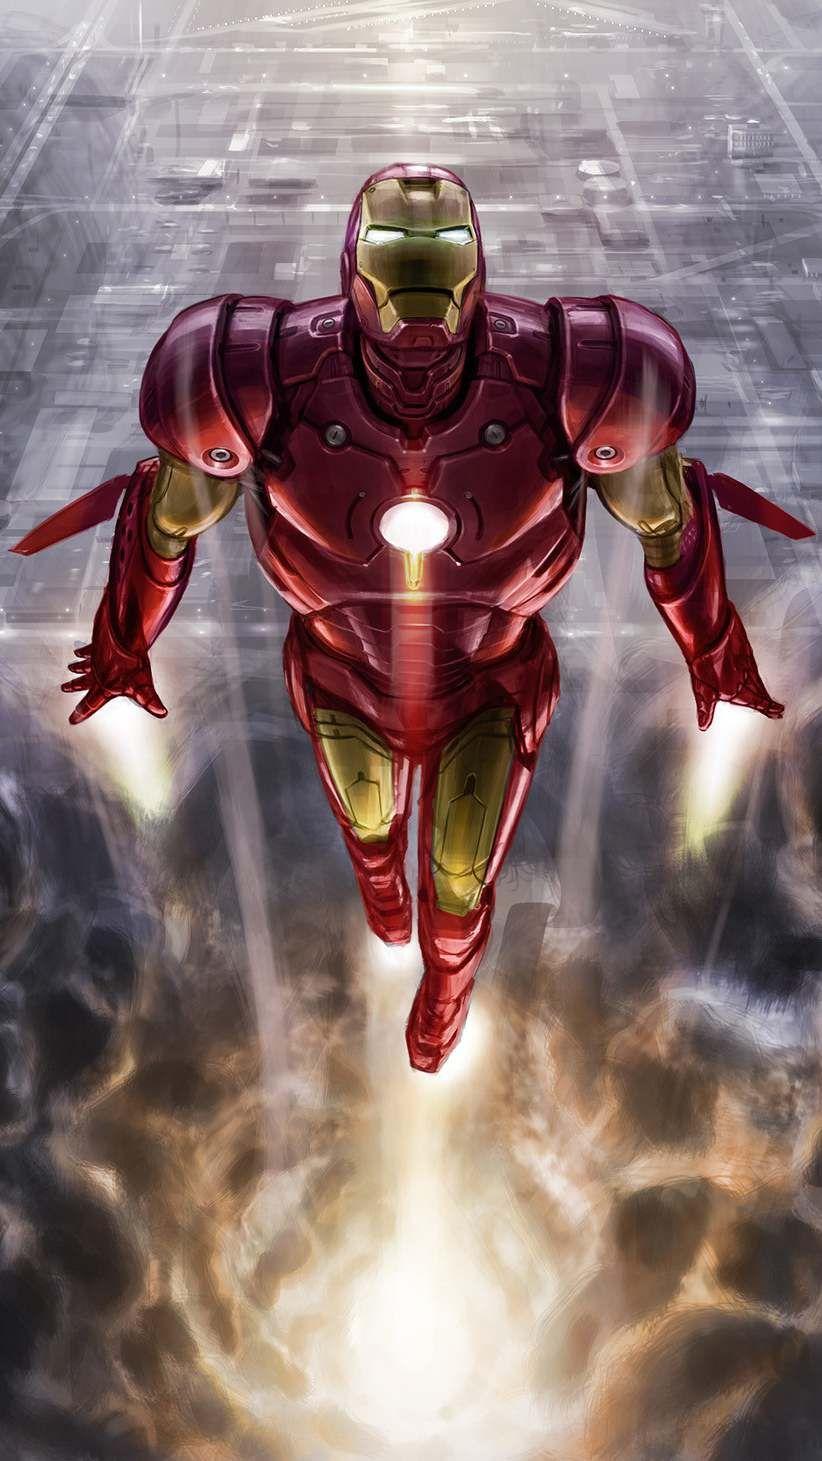 Iron Man Vertical Fly iPhone Wallpaper. Iron man artwork, Iron man flying, Iron man